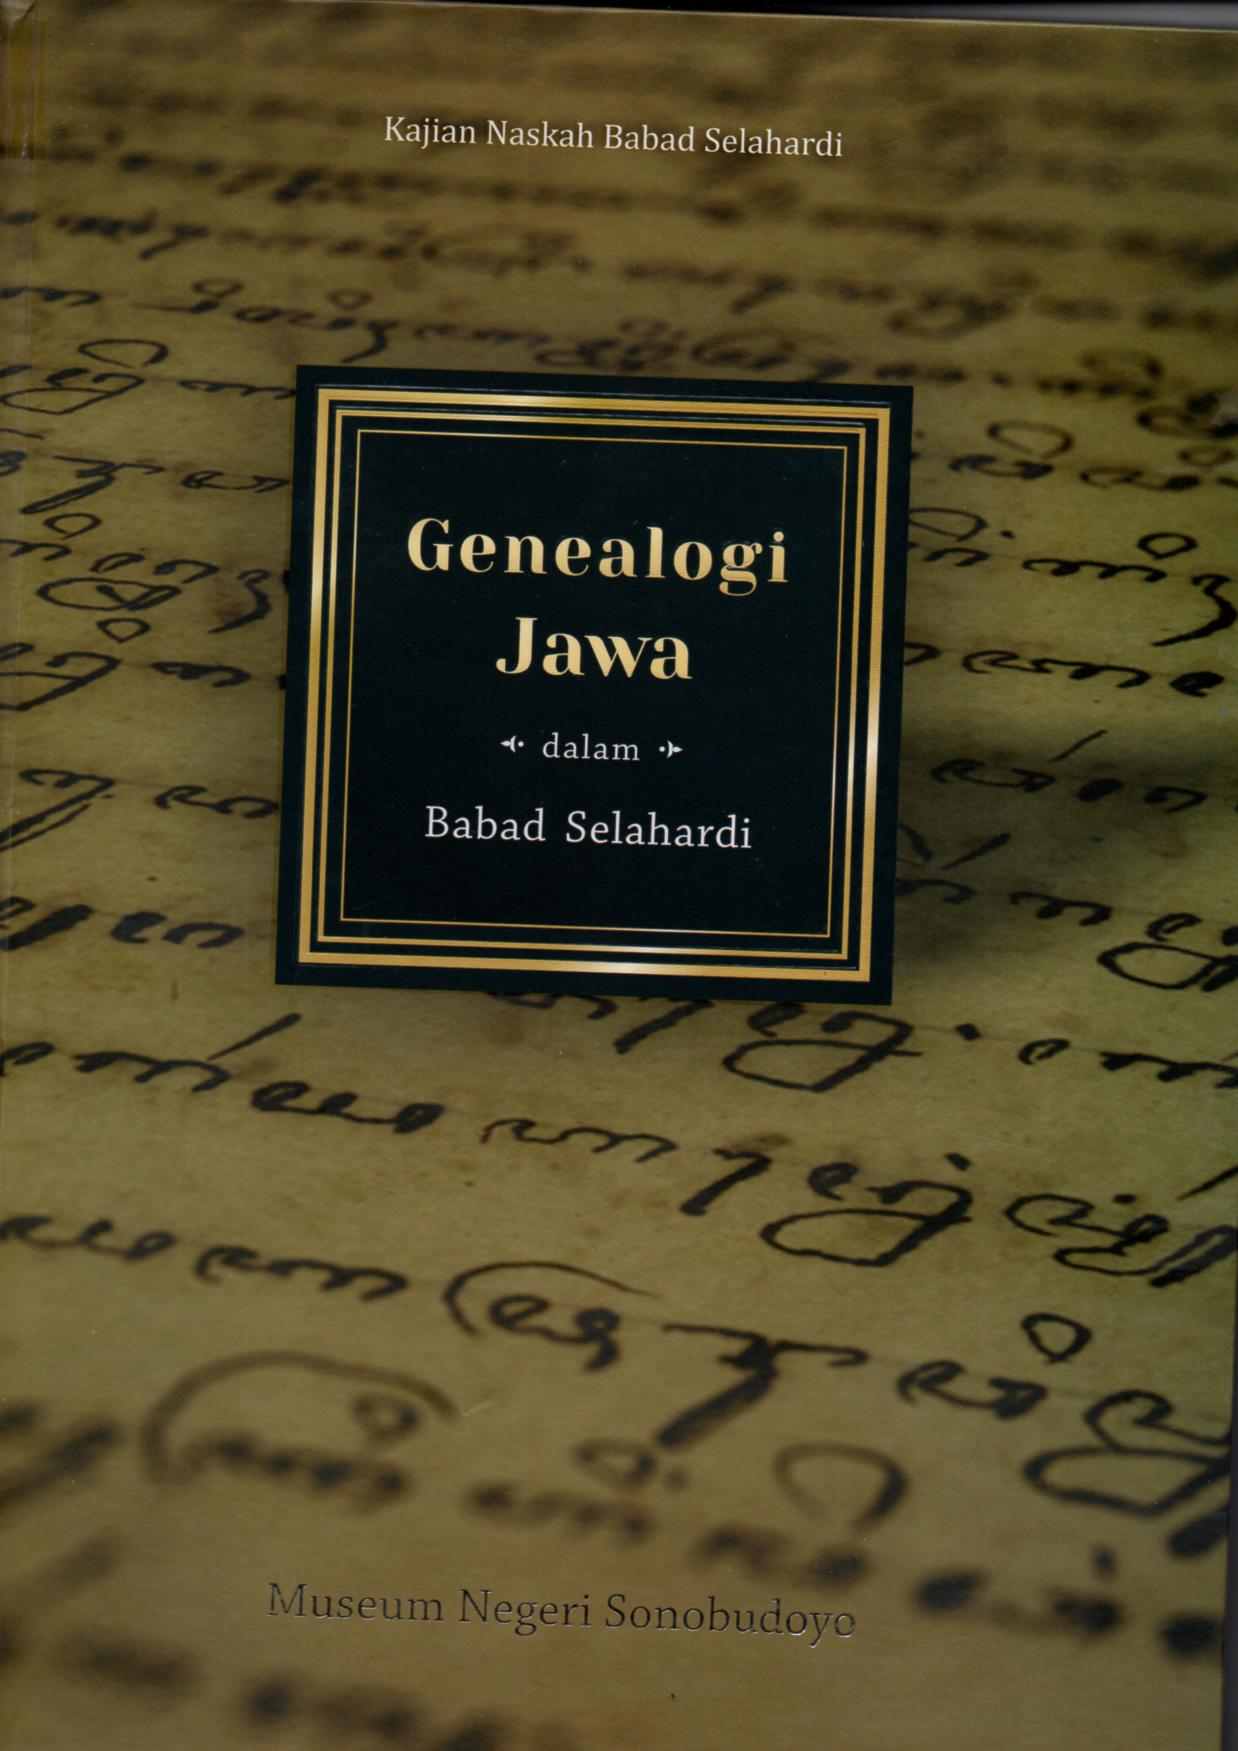 Genealogi Jawa dalam Babad Selahadi : Kajian Naskah Babad Selahardi